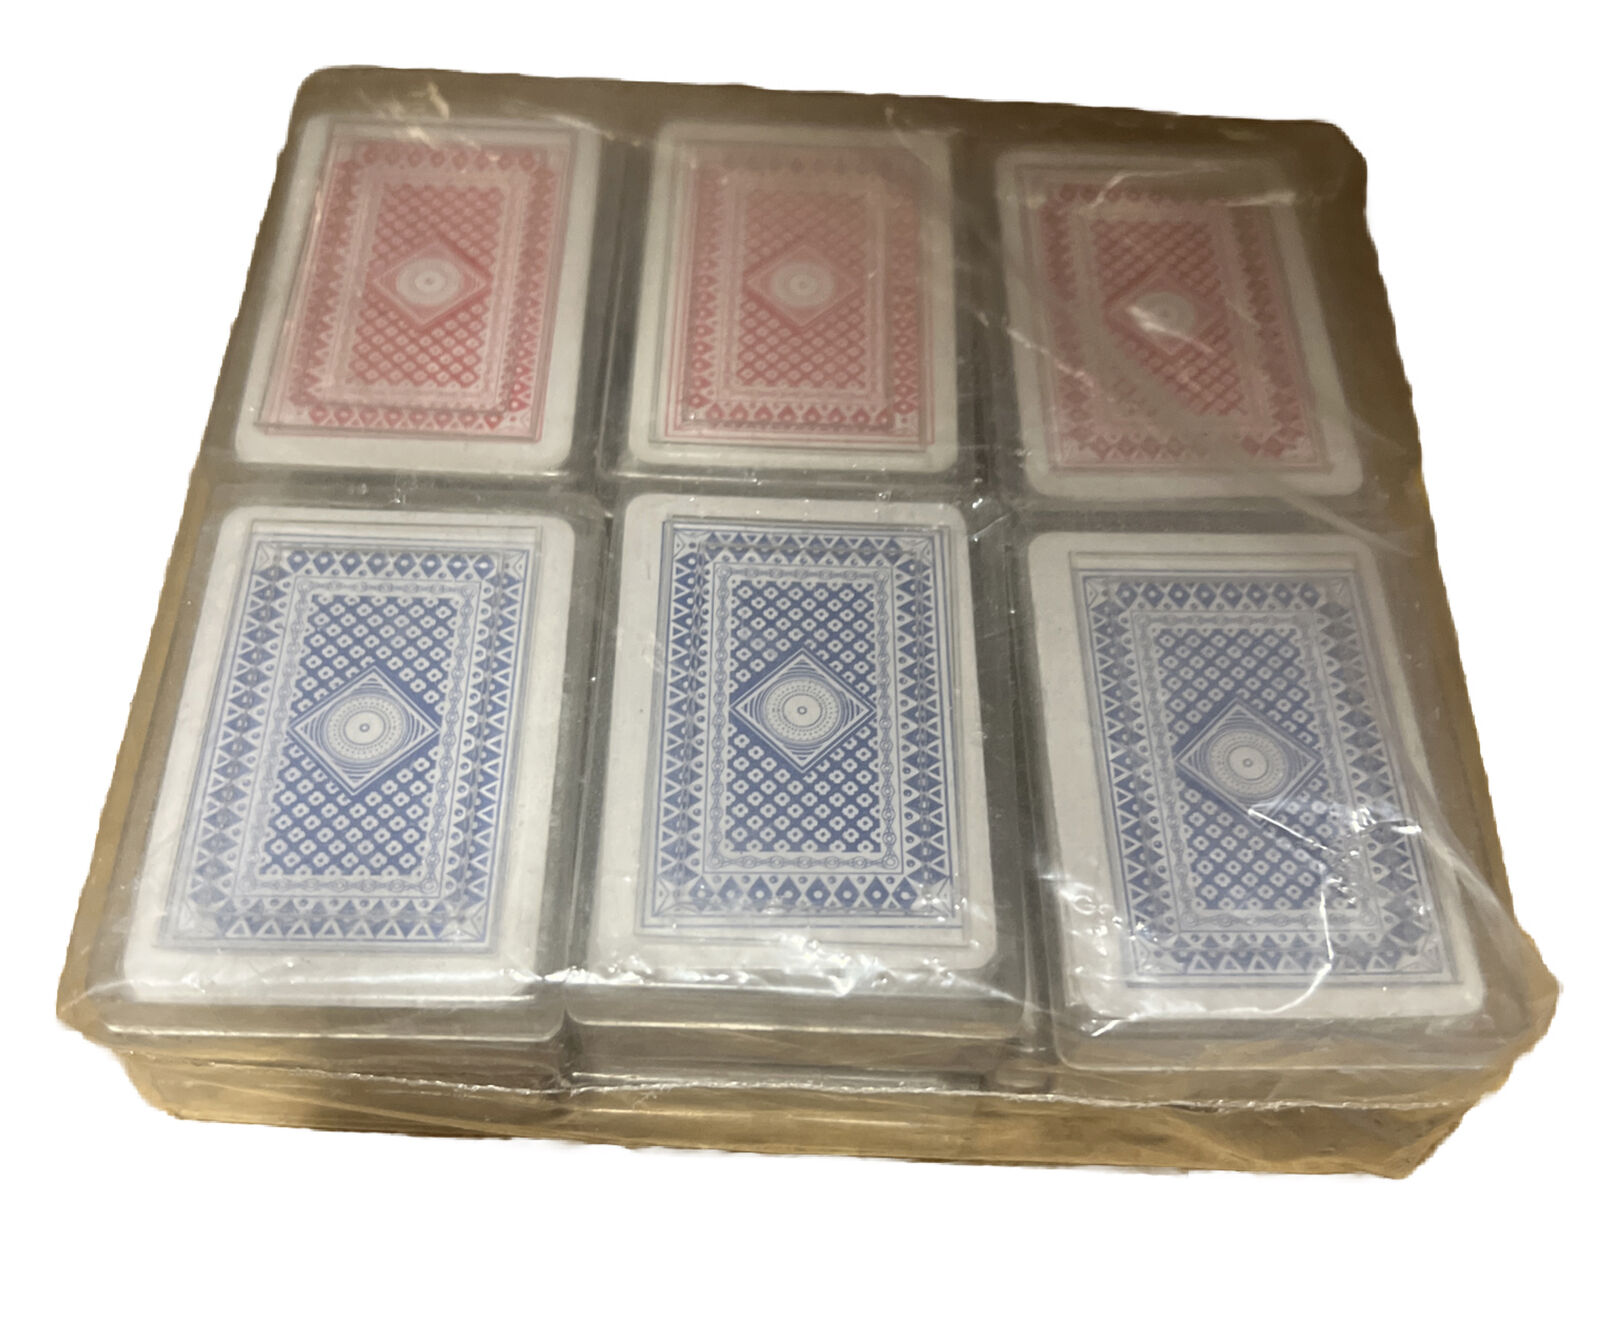 Miniature Playing Cards 12 Decks